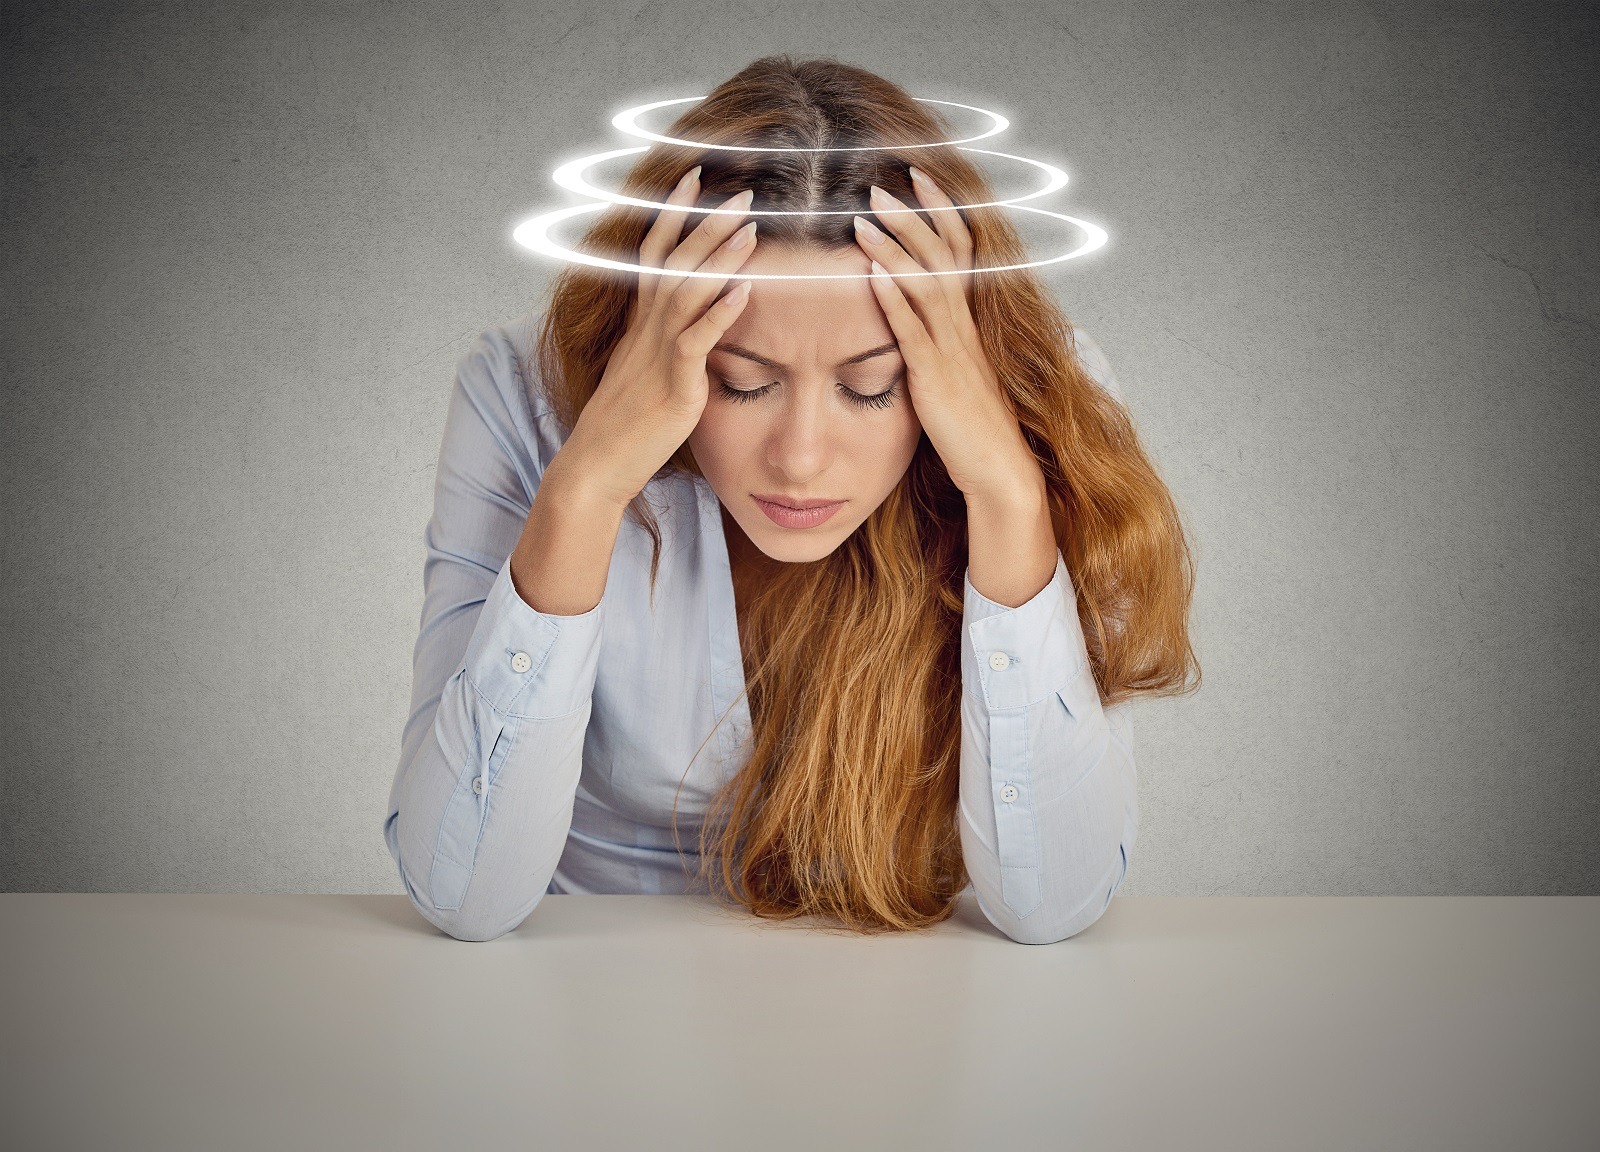 Dieta anti-migrena: Ce alimente sa introduci in dieta zilnica ca sa eviti durerile de cap